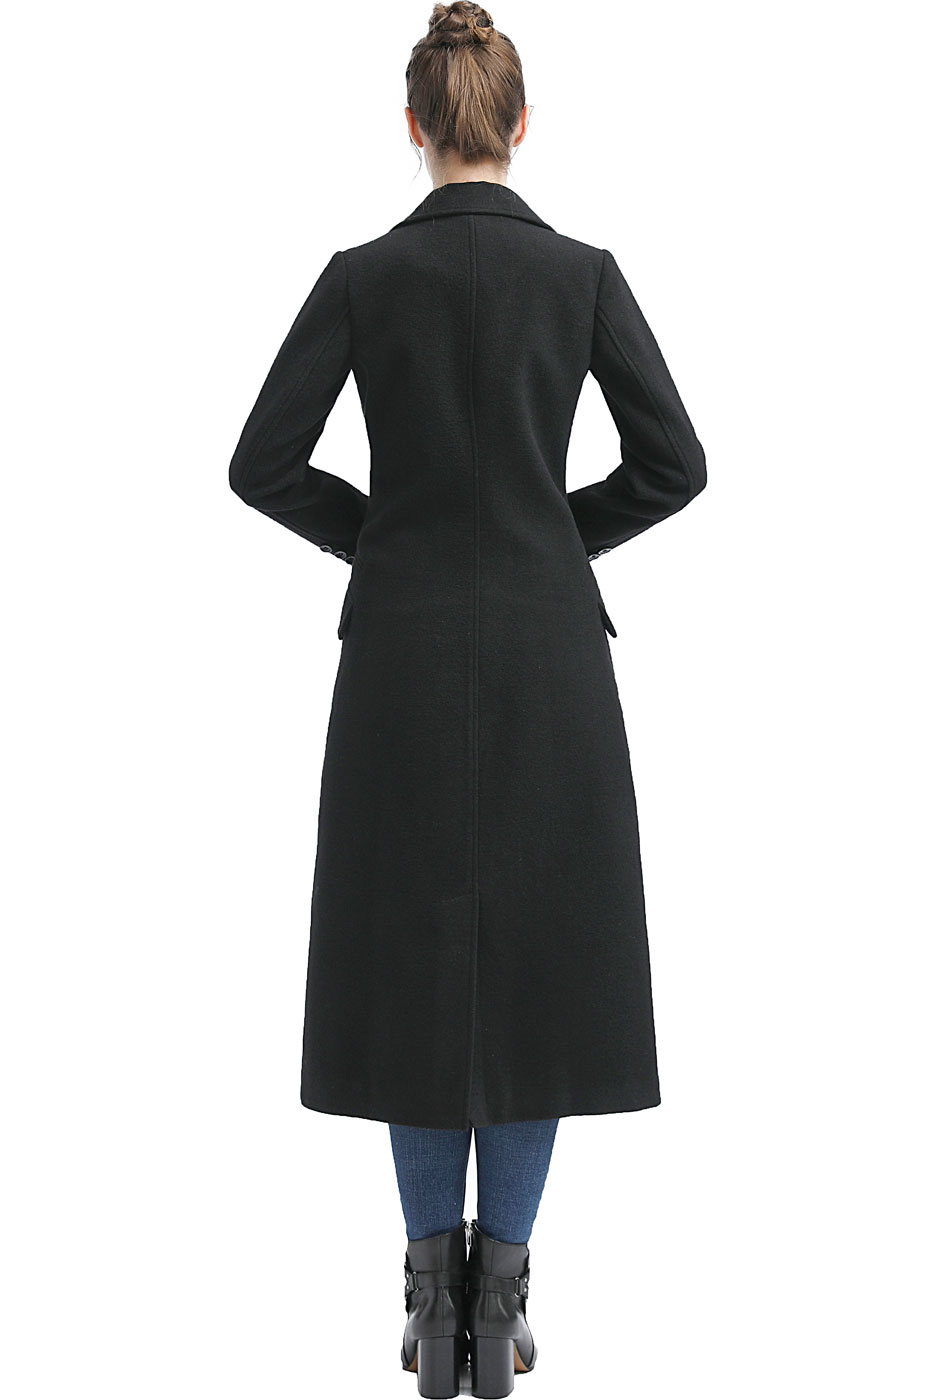 Women Fay Wool Walking Coat (Regular & Plus Size & Petite) - image 4 of 4